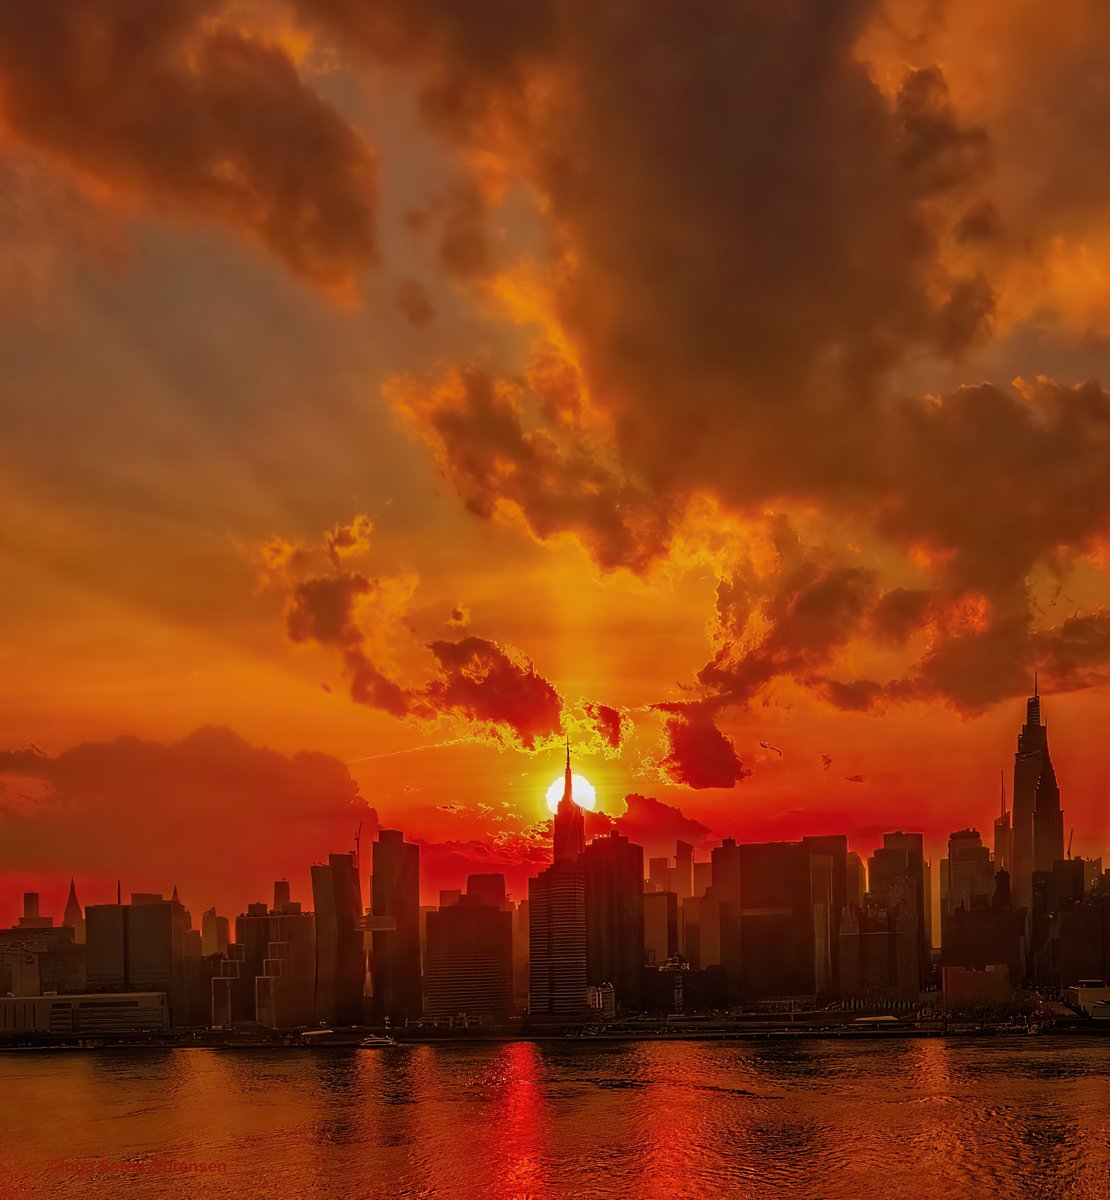 Splash of fiery gold in the #sunset skies above #NYC tonight. #NewYork #NewYorkCity